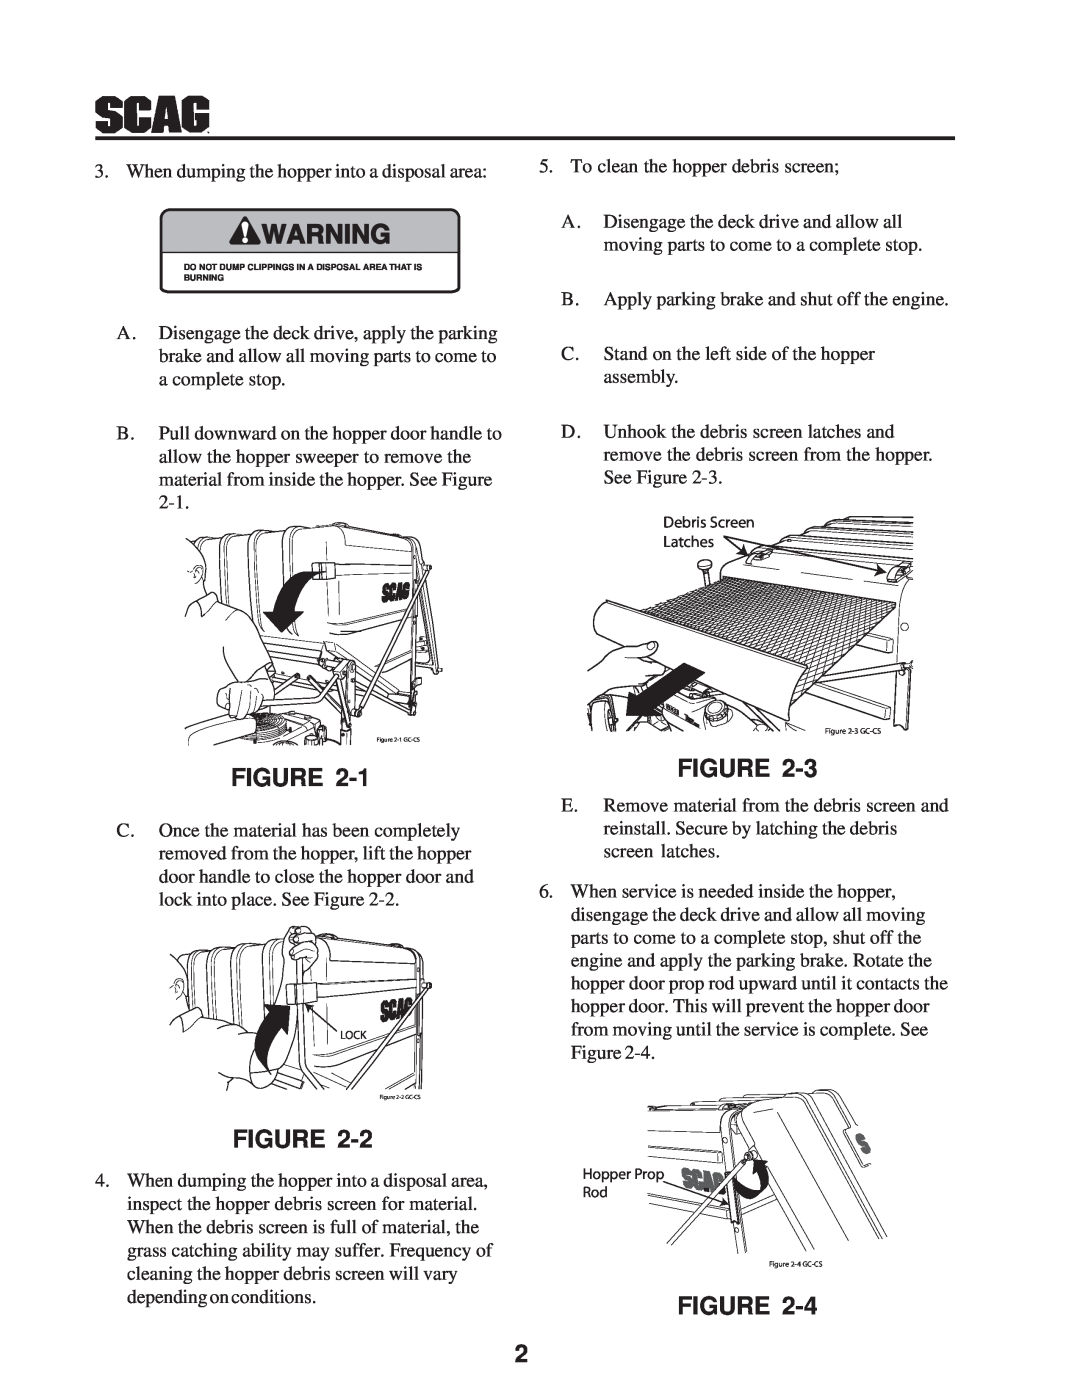 Scag Power Equipment GC-STT-CS manual When dumping the hopper into a disposal area 